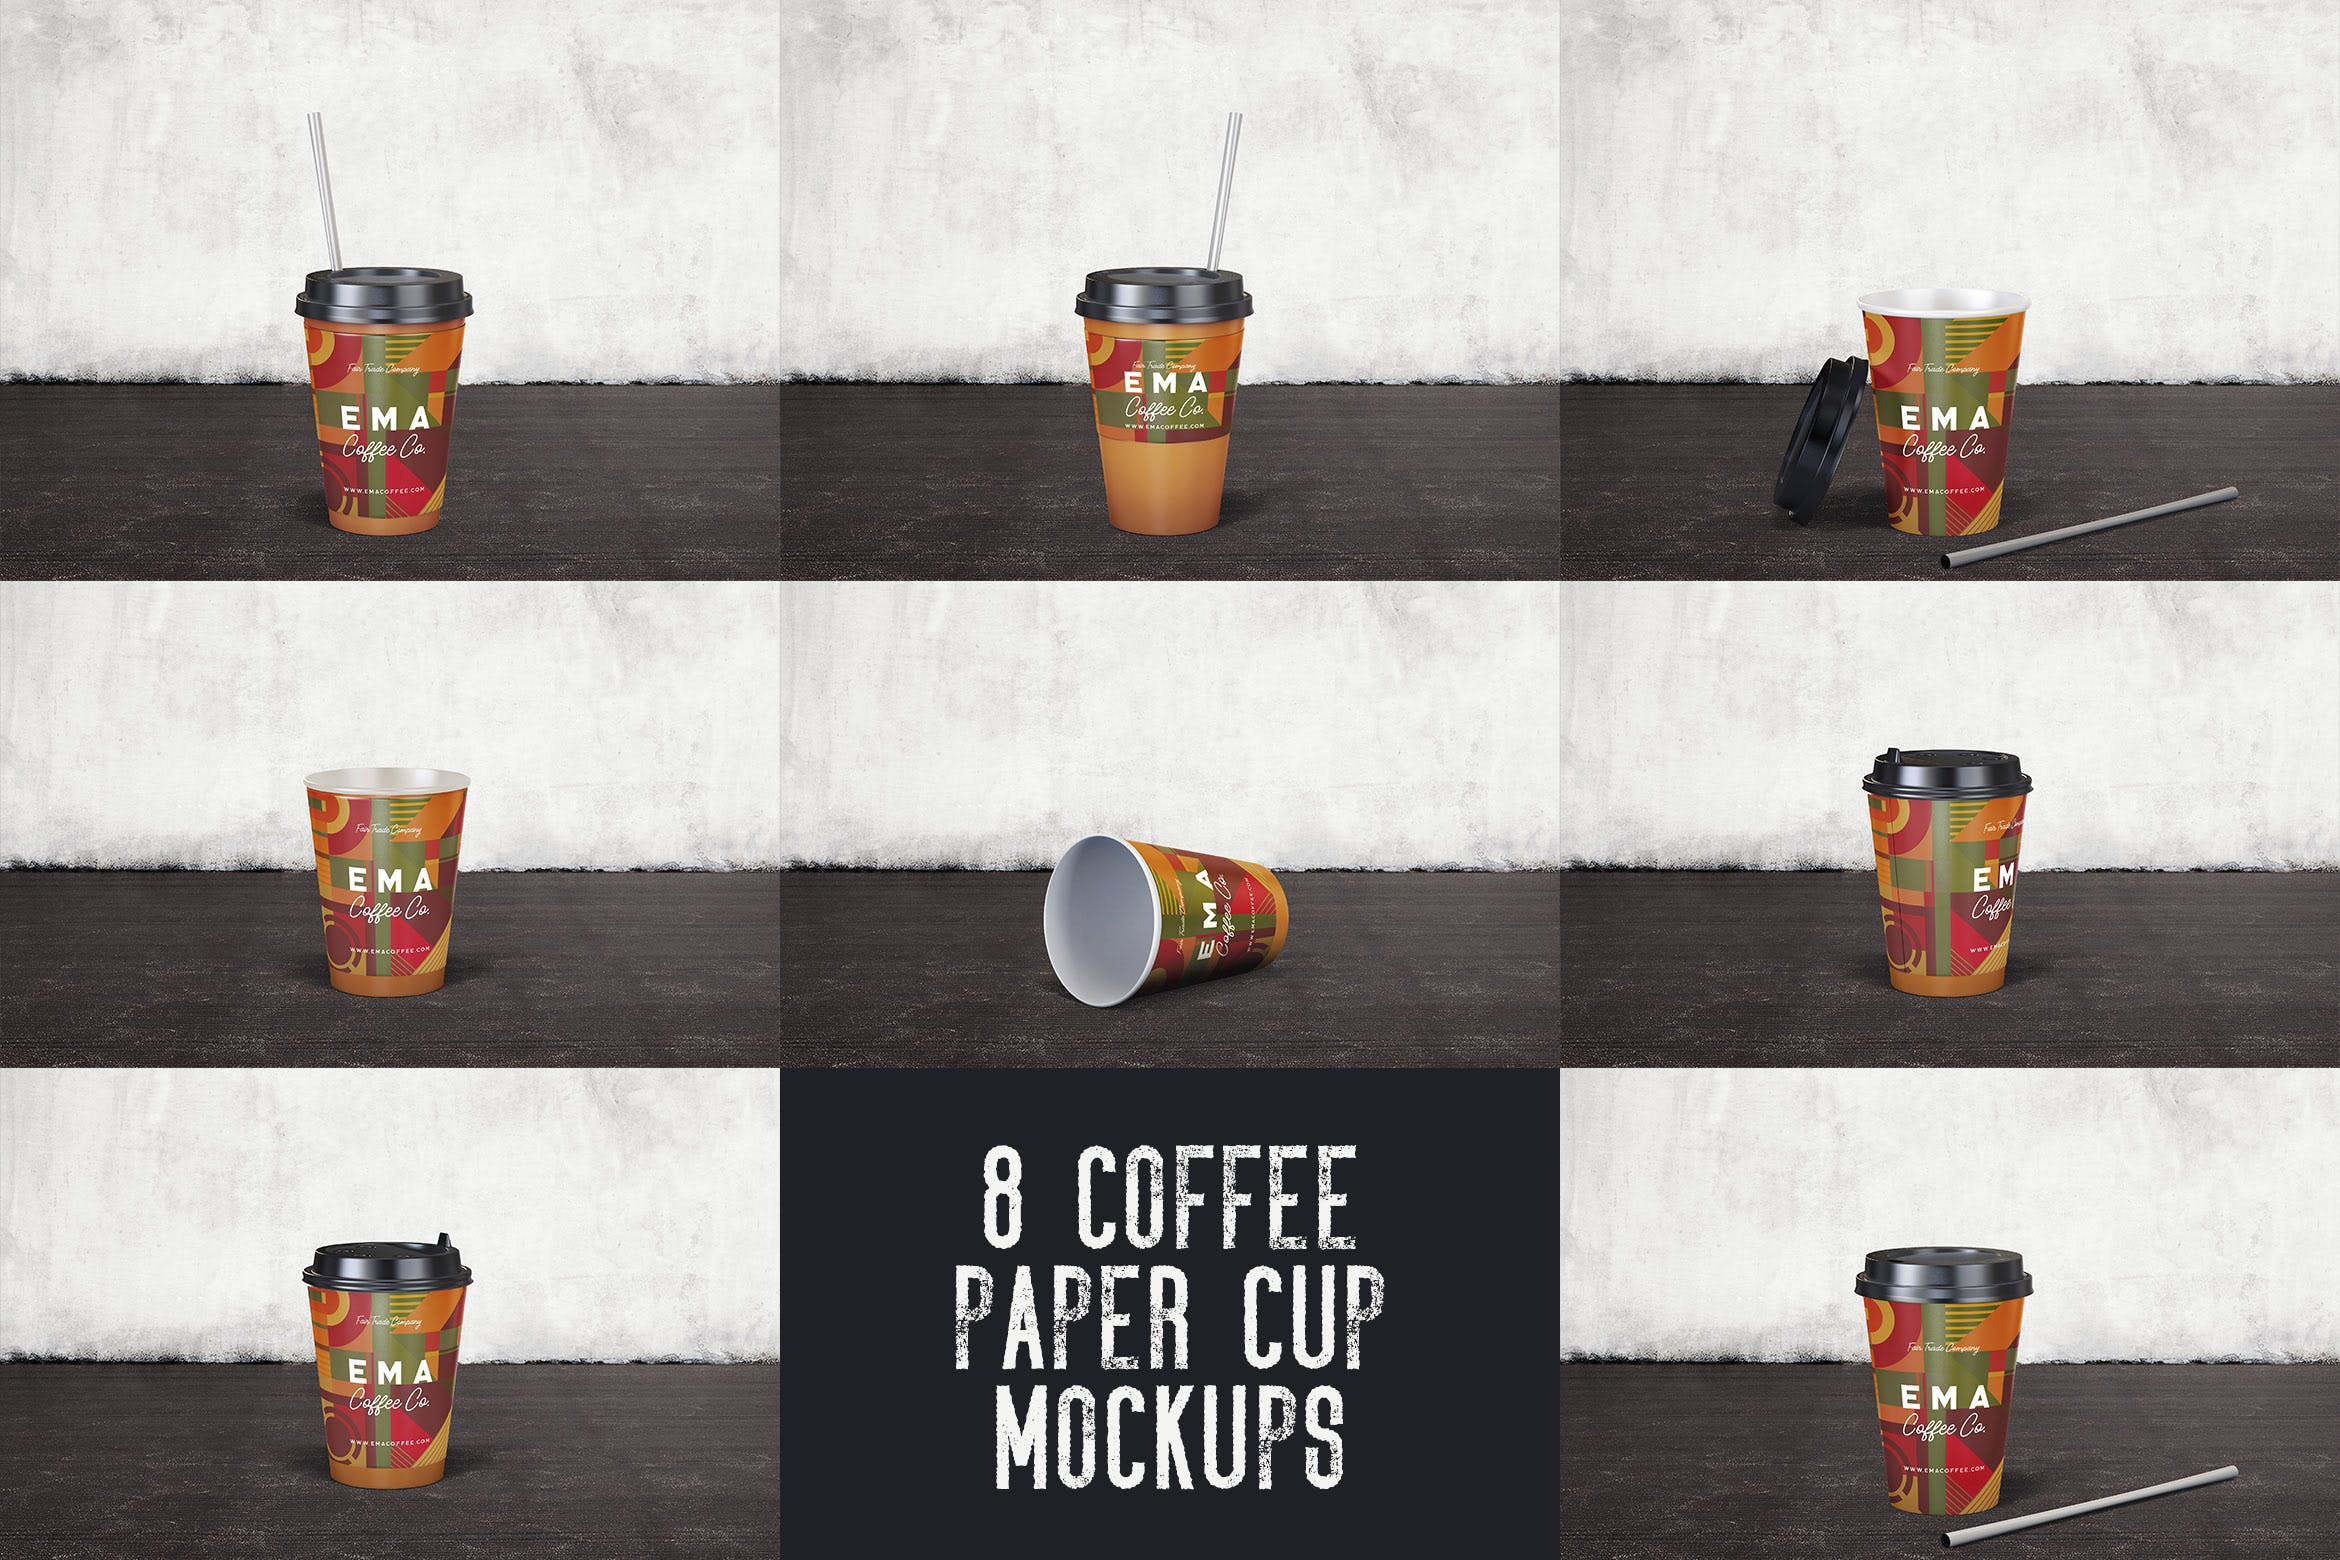 8个咖啡纸杯外观设计效果图素材库精选 8 Coffee Paper Cup Mockups插图